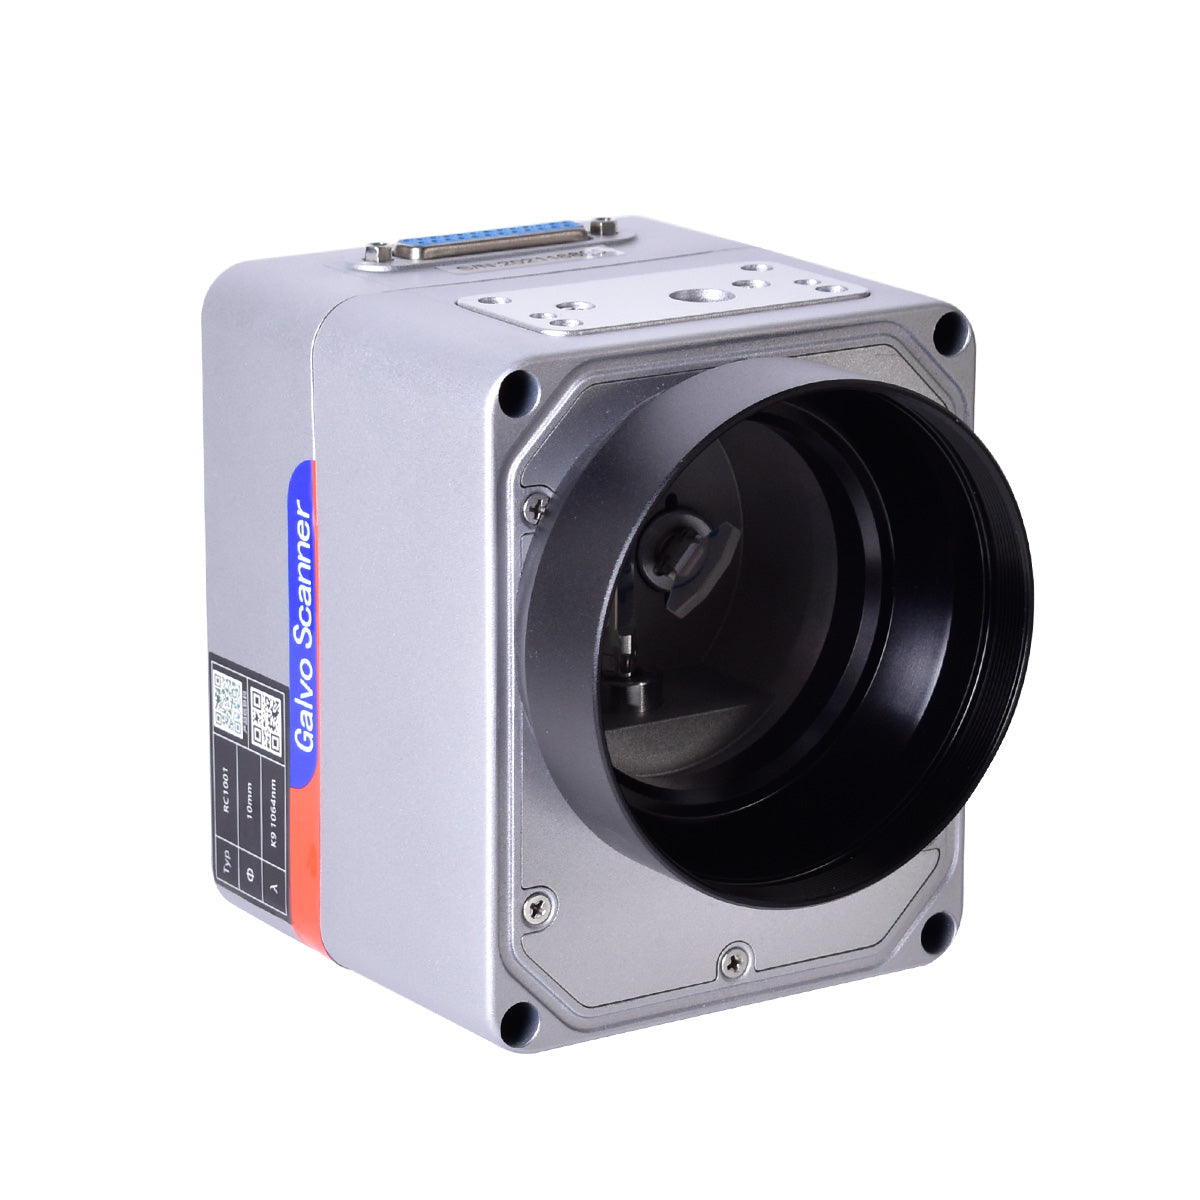 Startnow RC1001 Galvo Scanner SG7110 Galvanometer With Red Indicator Light Fiber CO2 UV Laser Marking Machine Galvo Head Set